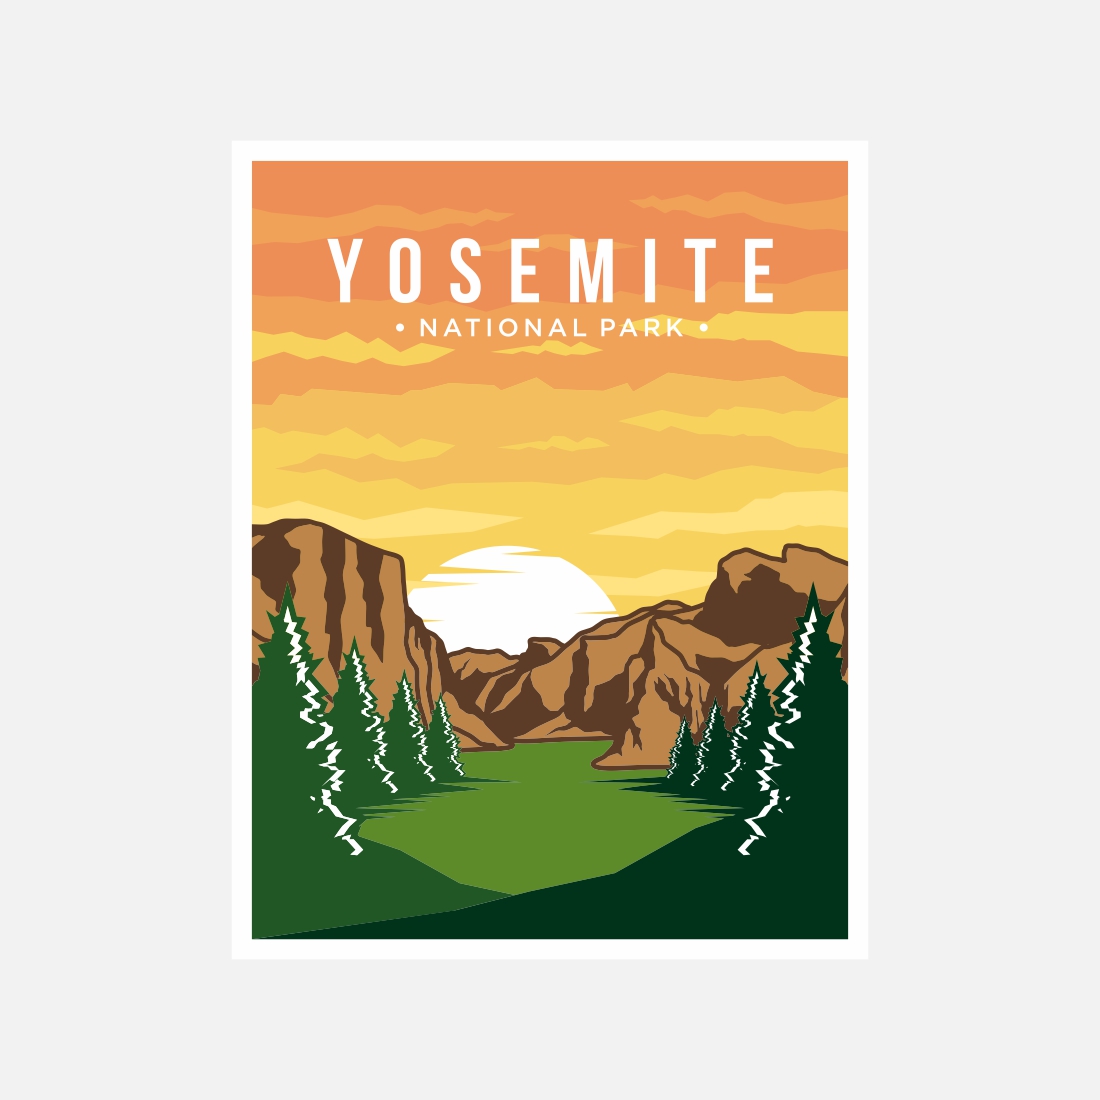 Yosemite National Park poster vector illustration design – Only $8 preview image.